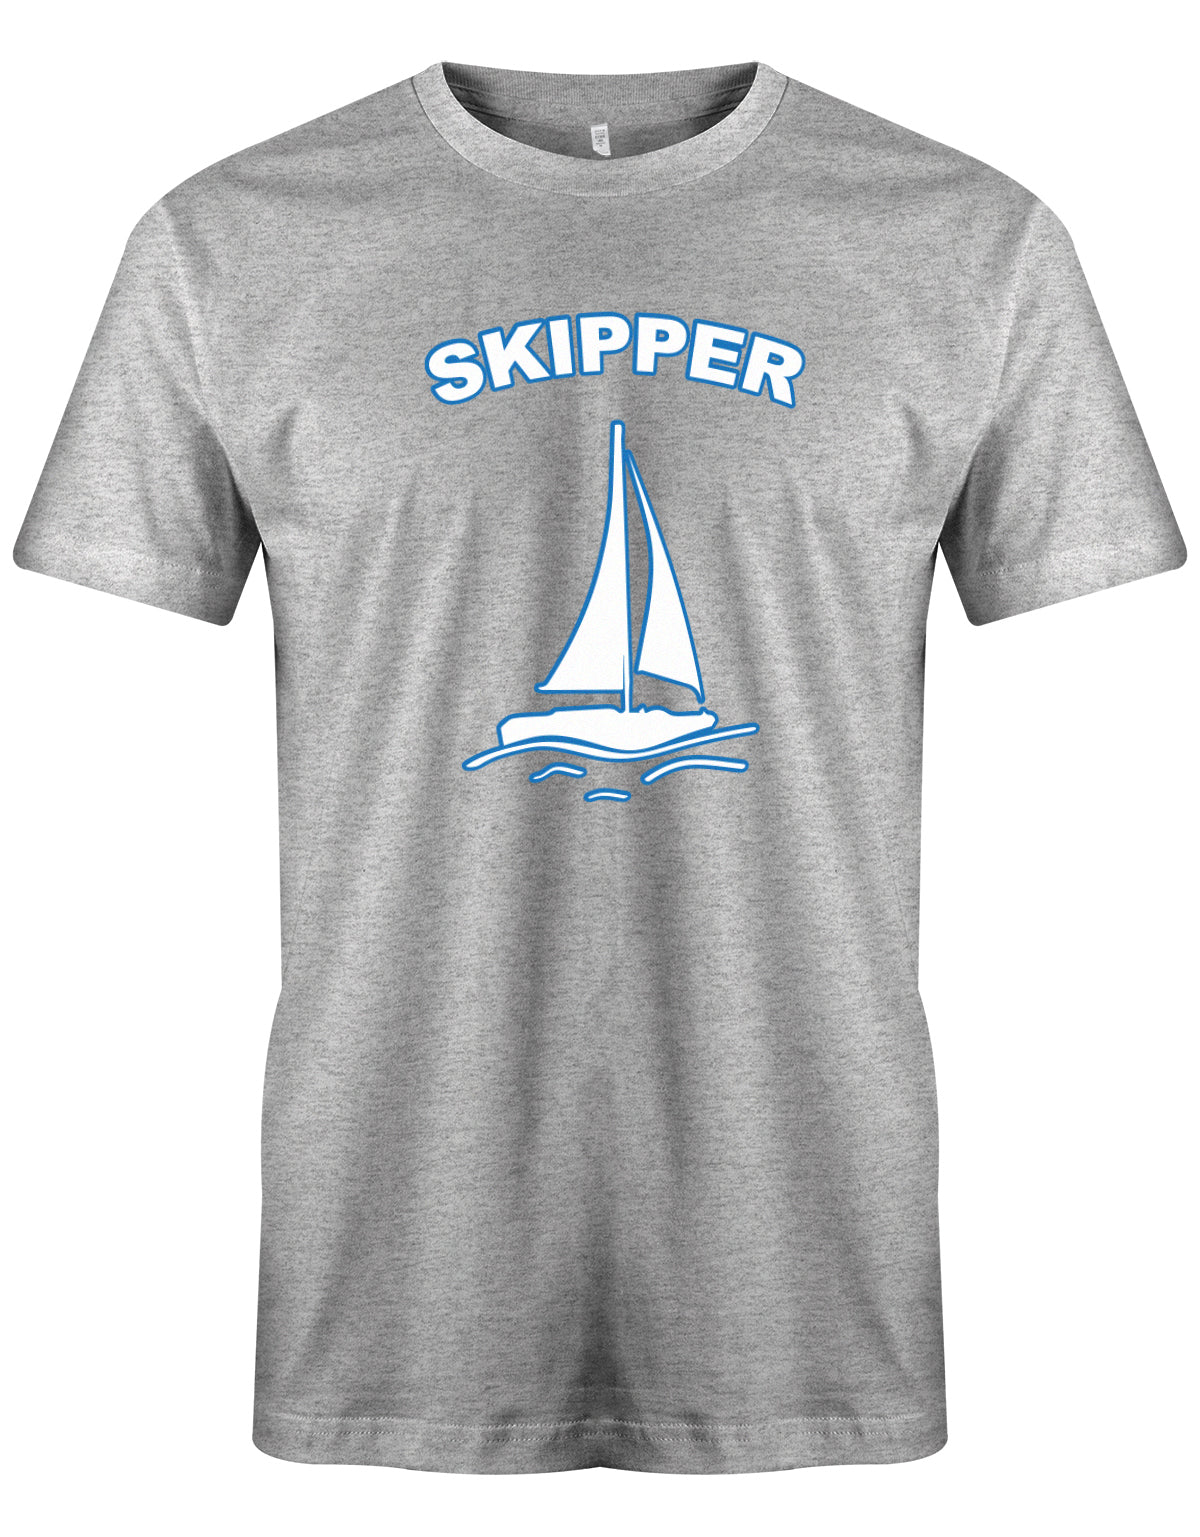 Skipper Segler - Segeln - Herren T-Shirt Grau